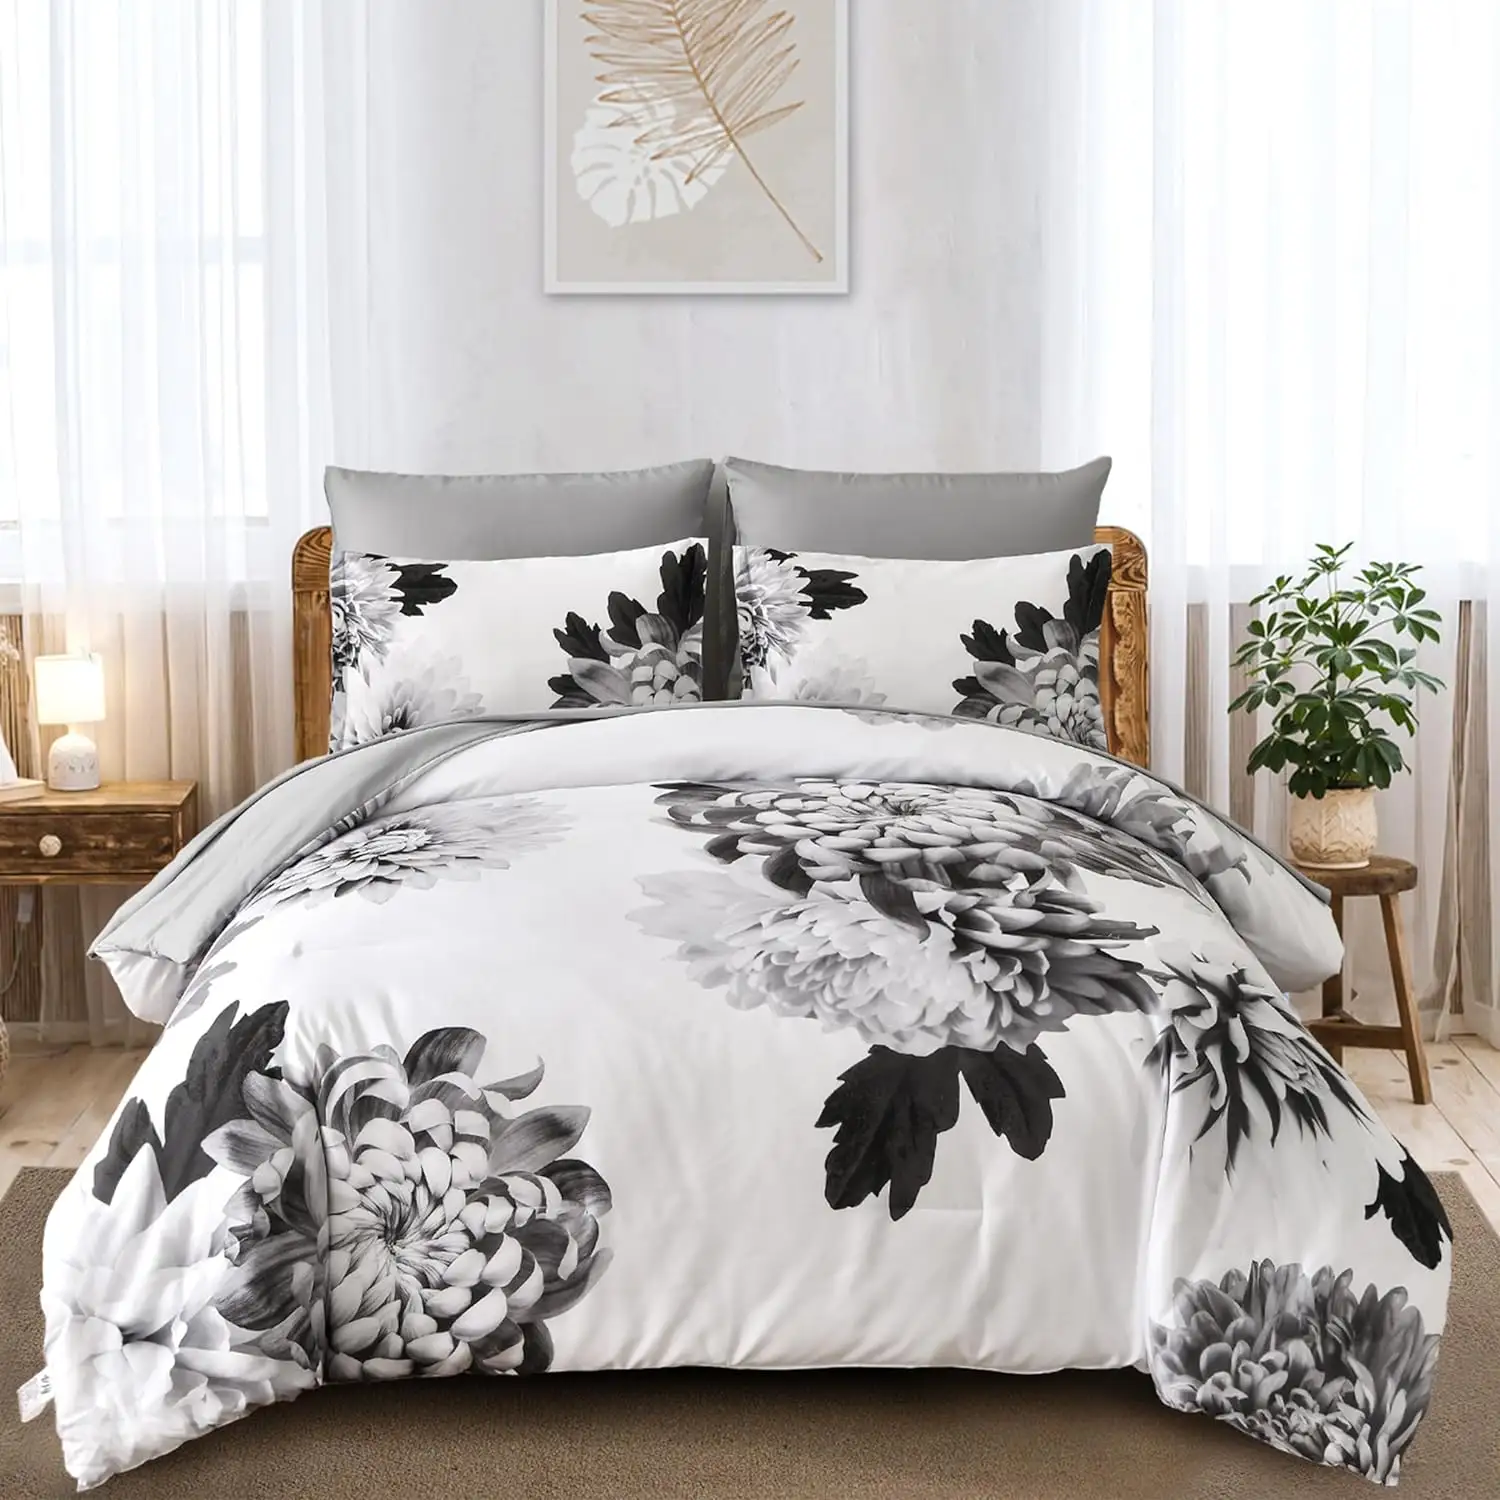 7 Piece Floral Grey Comforter Set With Flower Print Microfiber Comforter Bedding Set For All Season